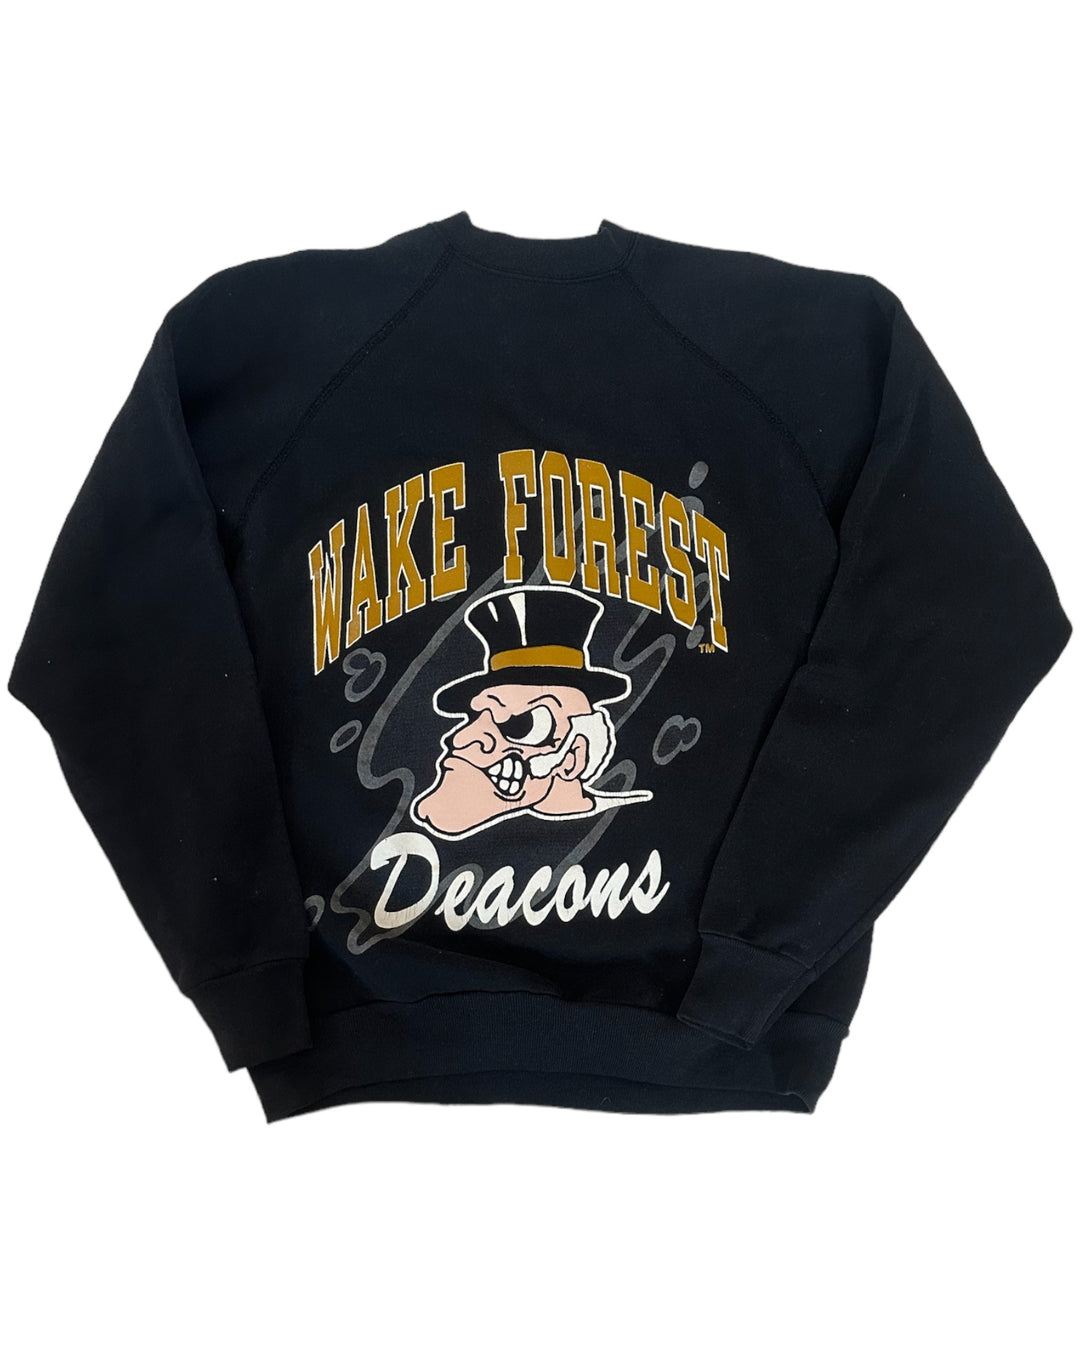 Wake Forest Vintage Sweatshirt